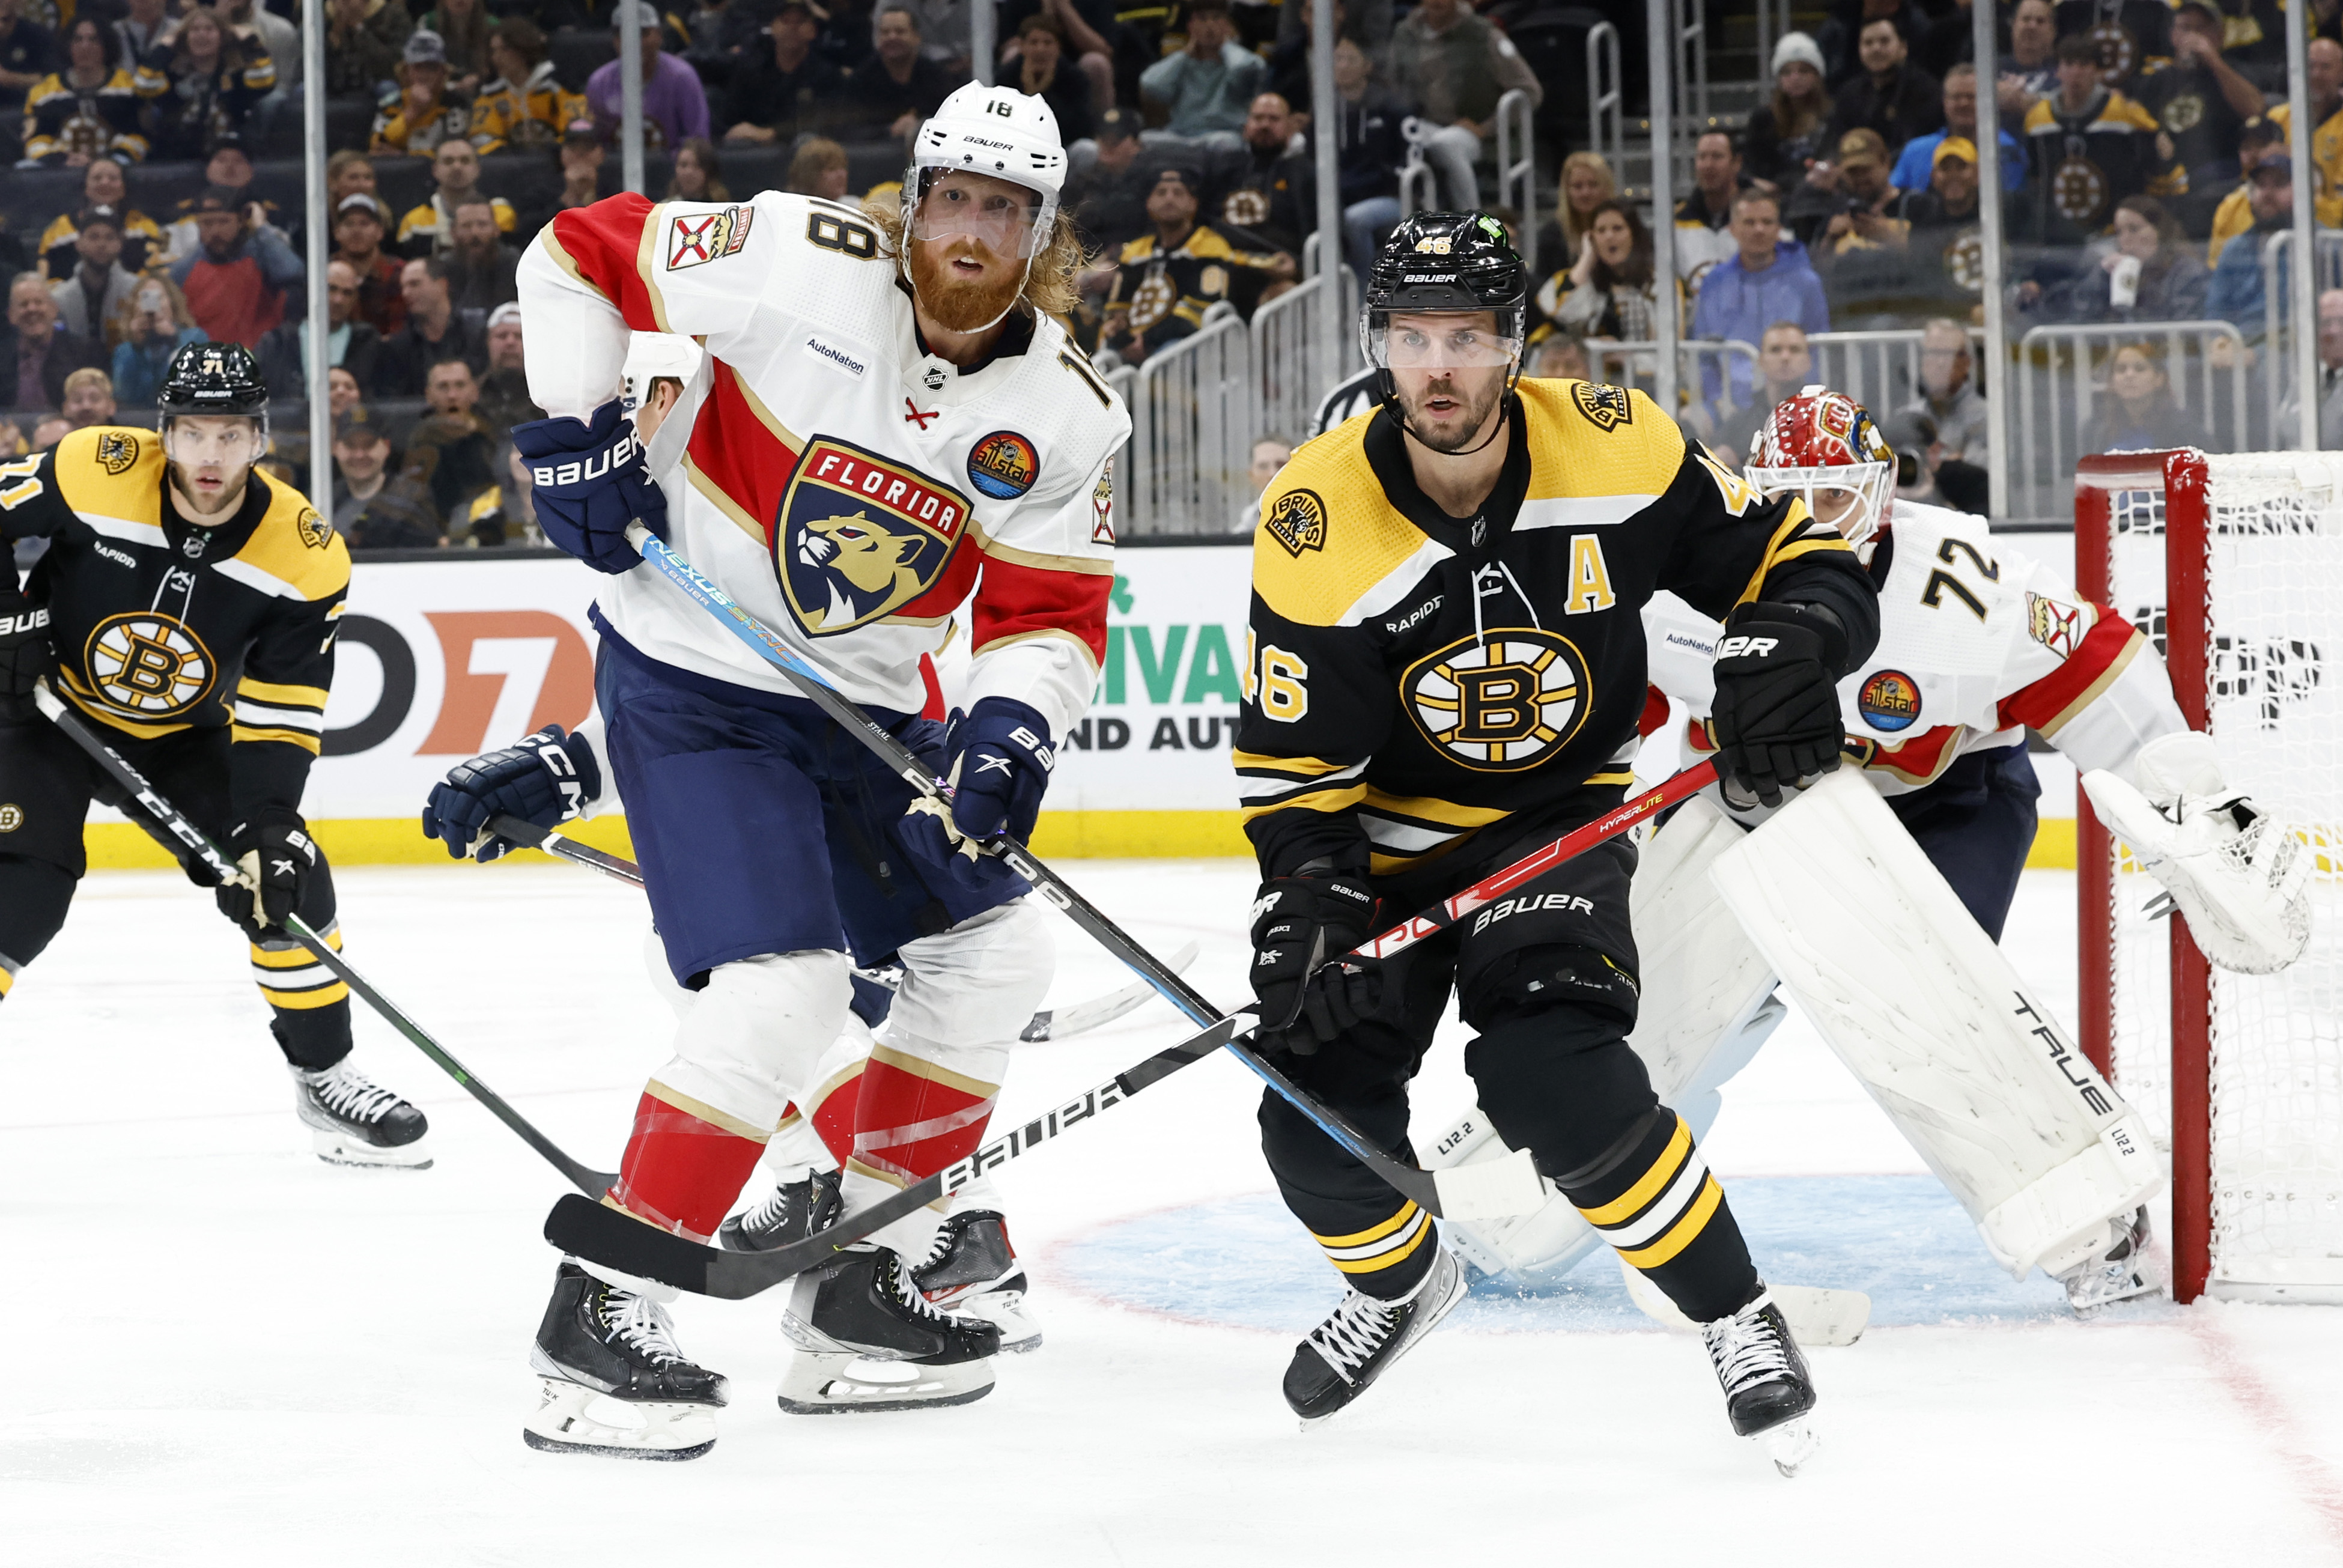 NHL: OCT 17 Panthers at Bruins